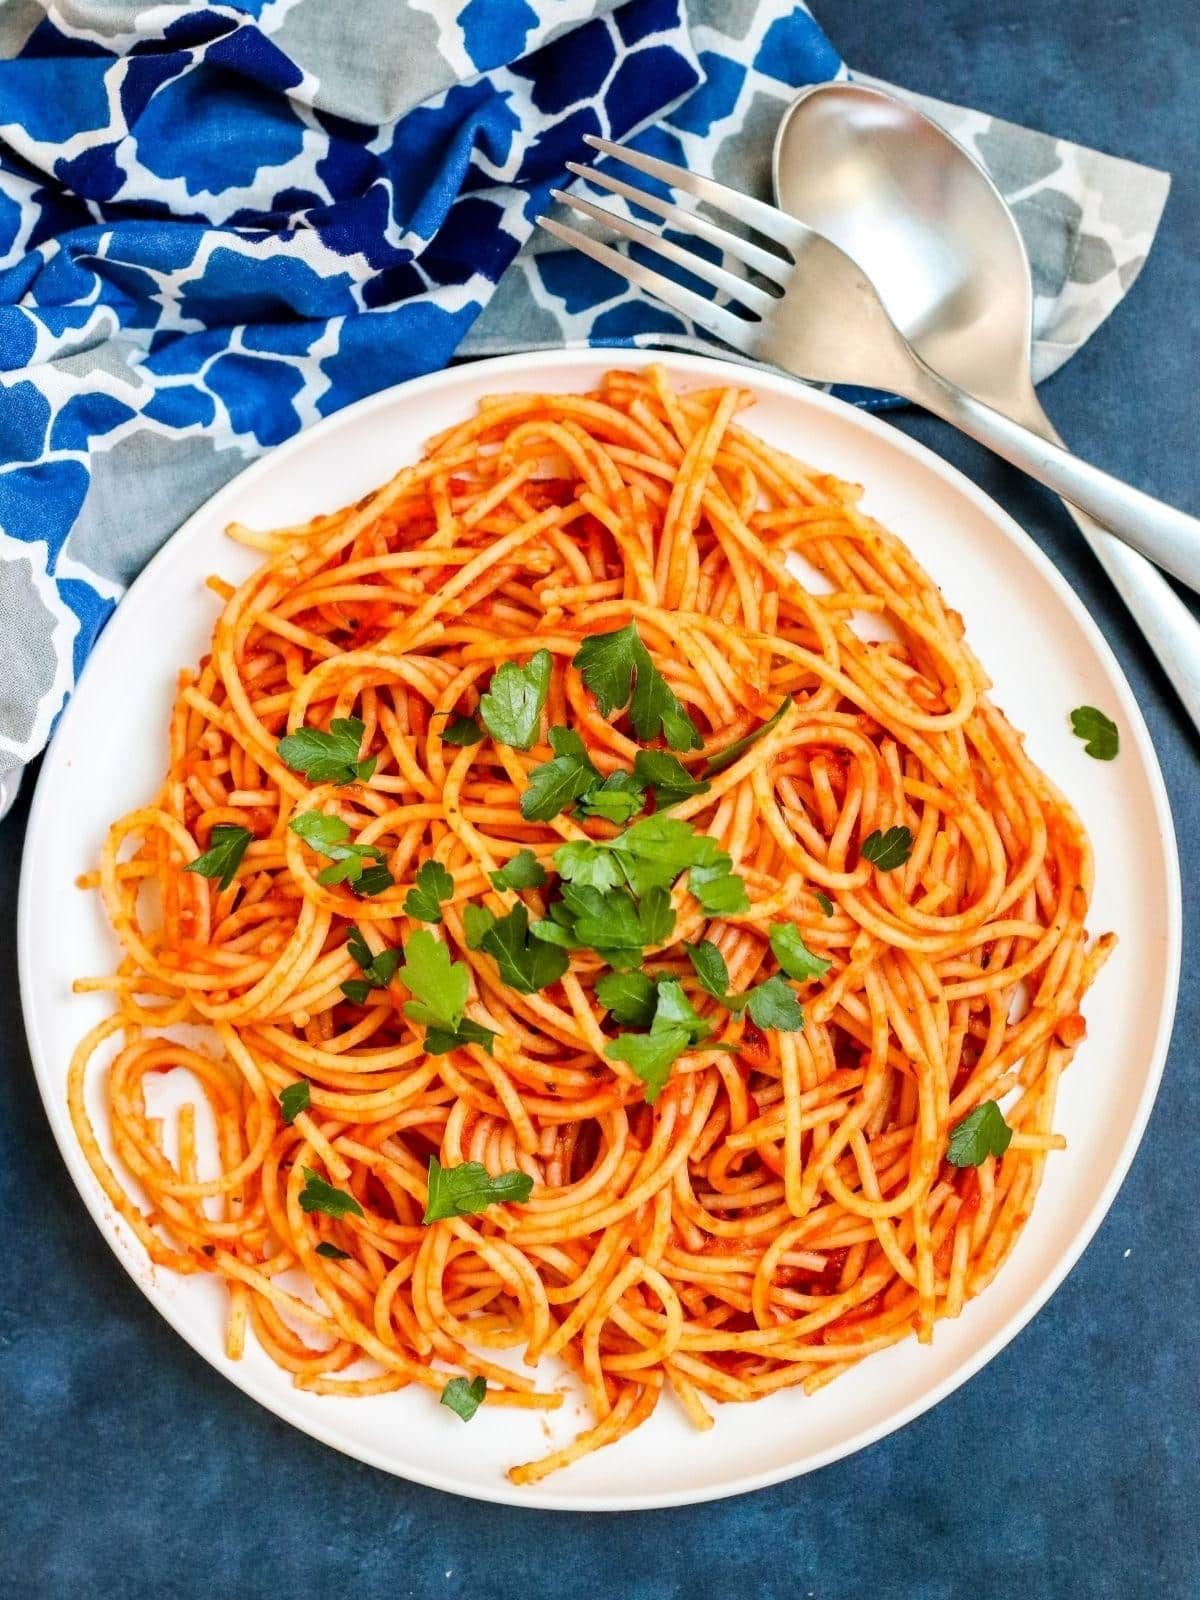 Plate of spaghetti with tomato paste pasta sauce.